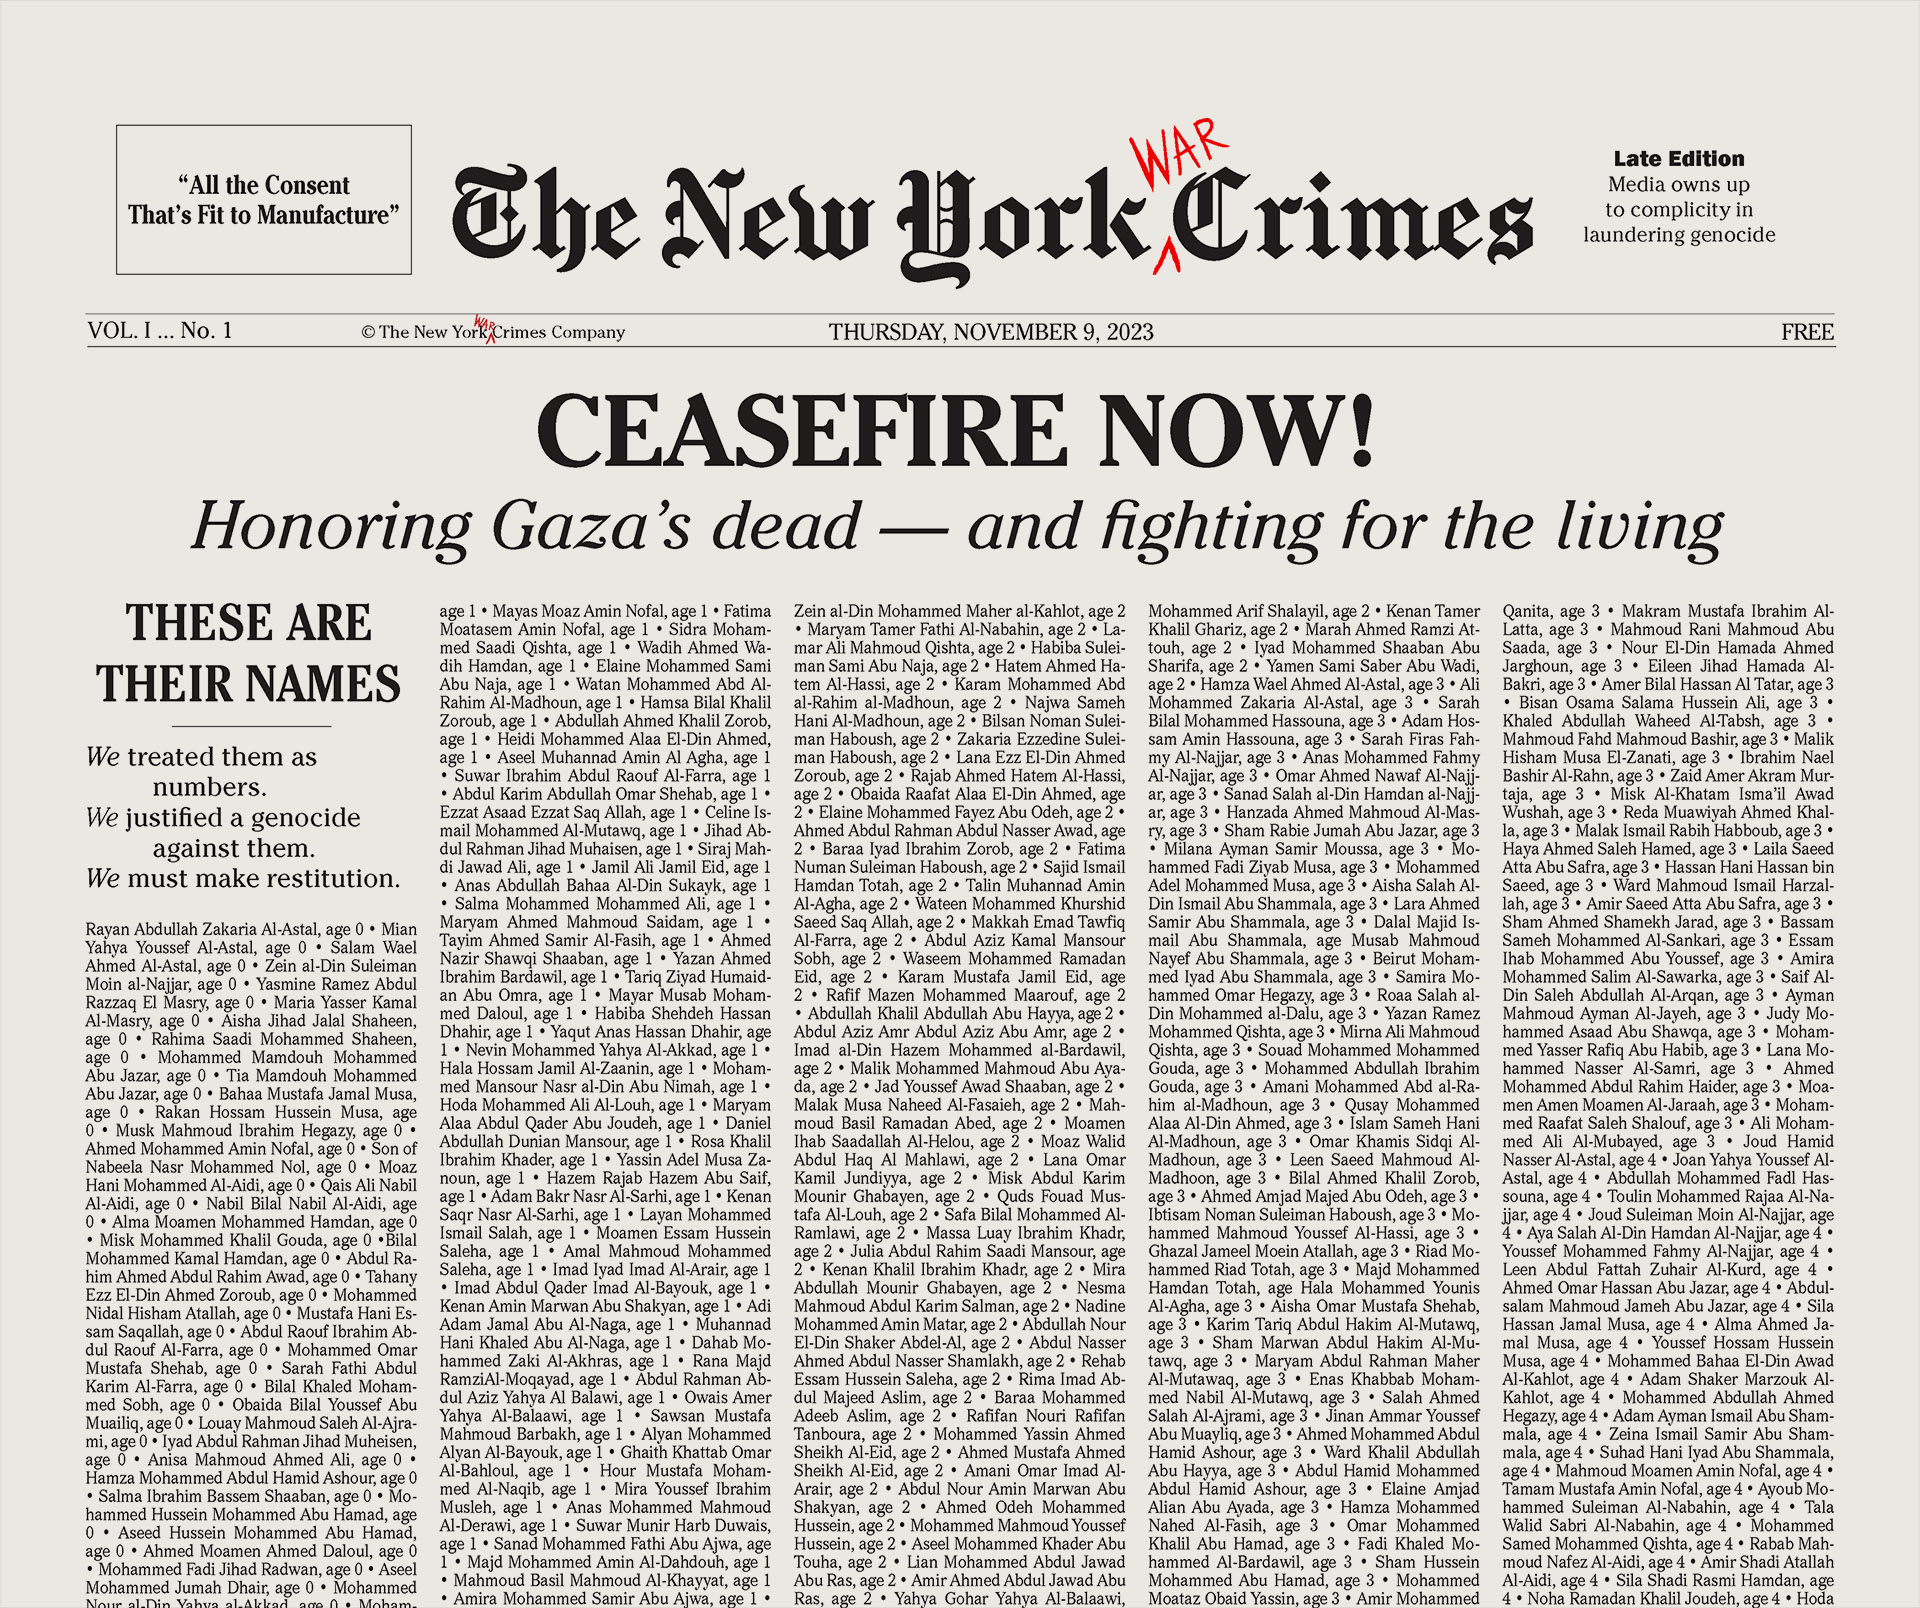 https://newyorkwarcrimes.com/media/pages/print-issue-vol-i-no-1-ceasefire-now/6f64f74b2e-1708980694/ny-crimes-01-cover.jpg